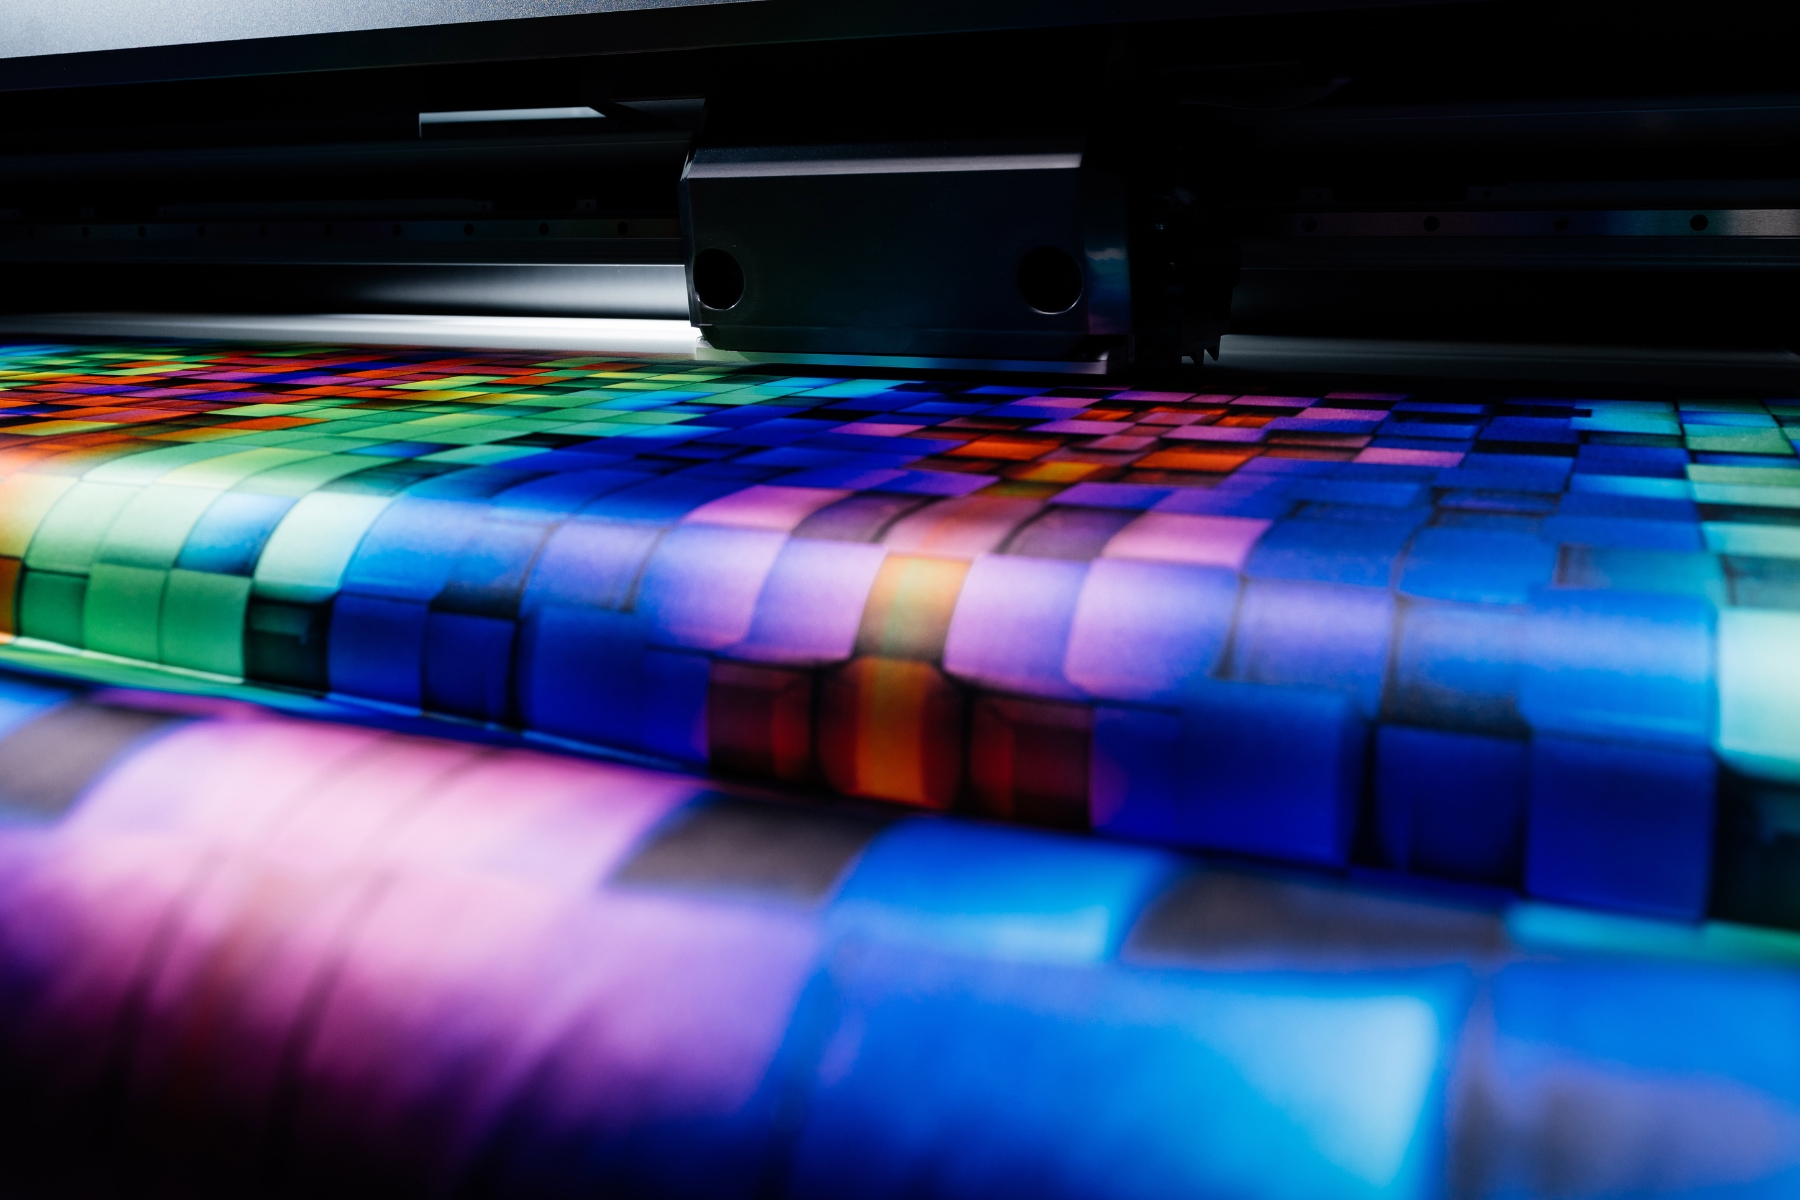 A Mimaki textile printer printing a bright coloured design onto cotton